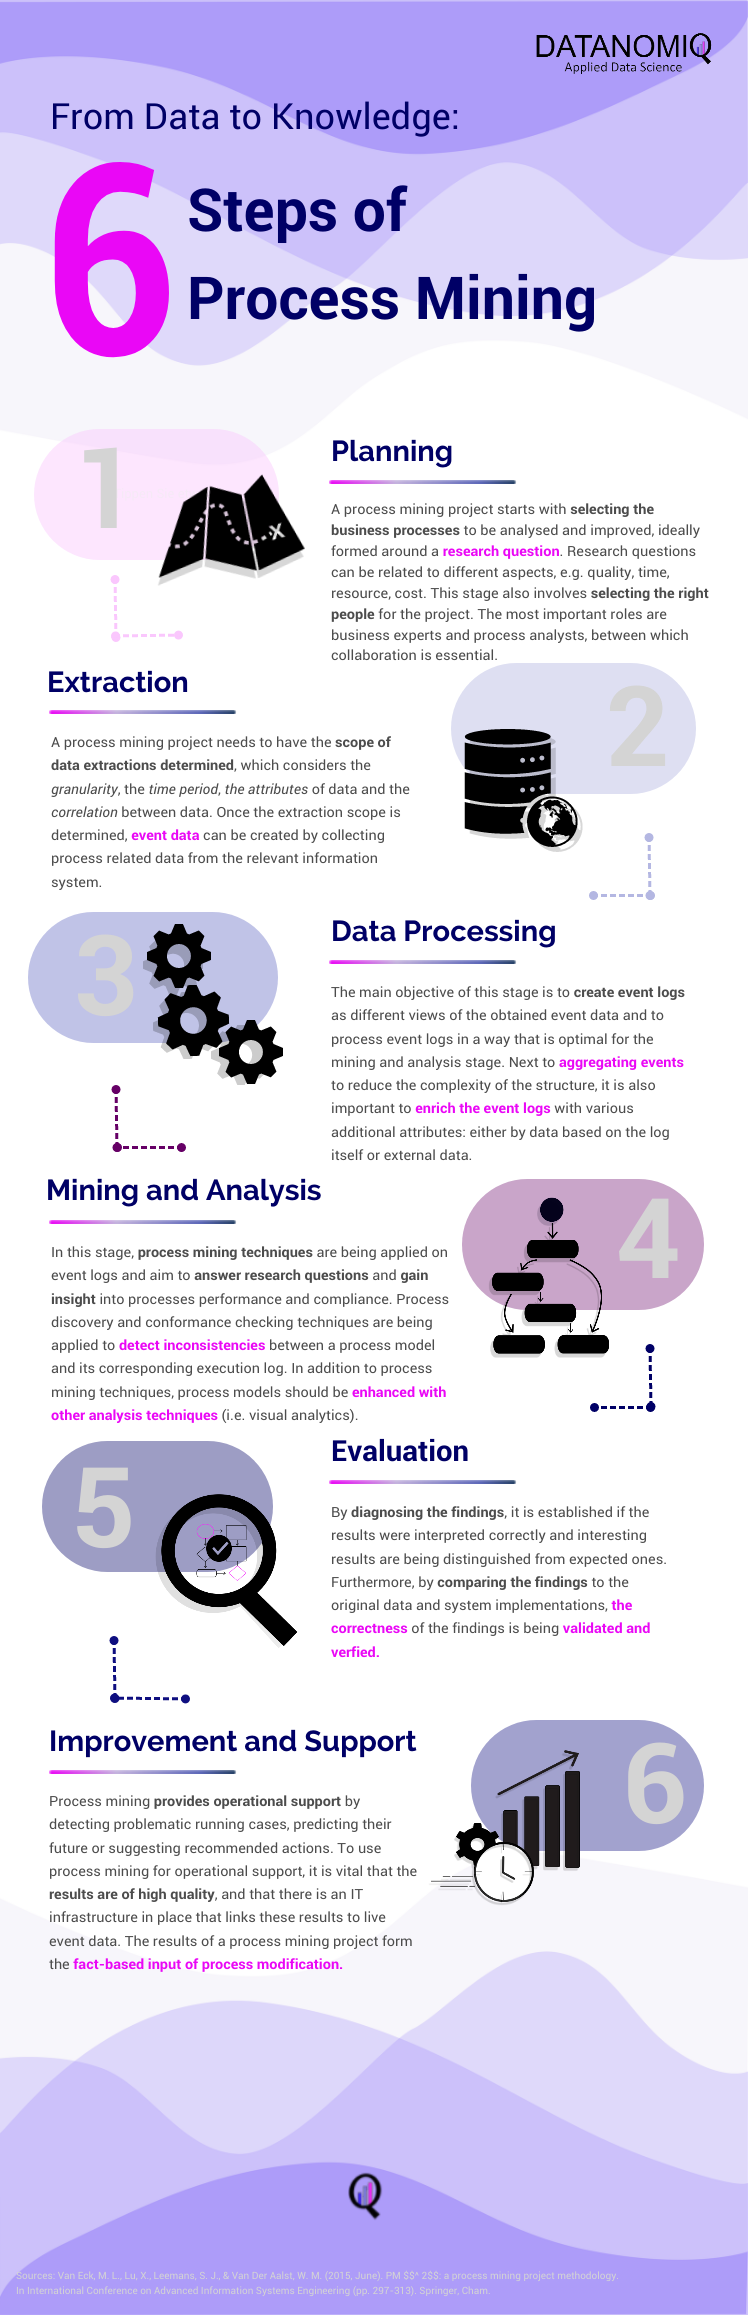 DATANOMIQ Process Mining - 6 Steps of Doing Process Mining Analysis